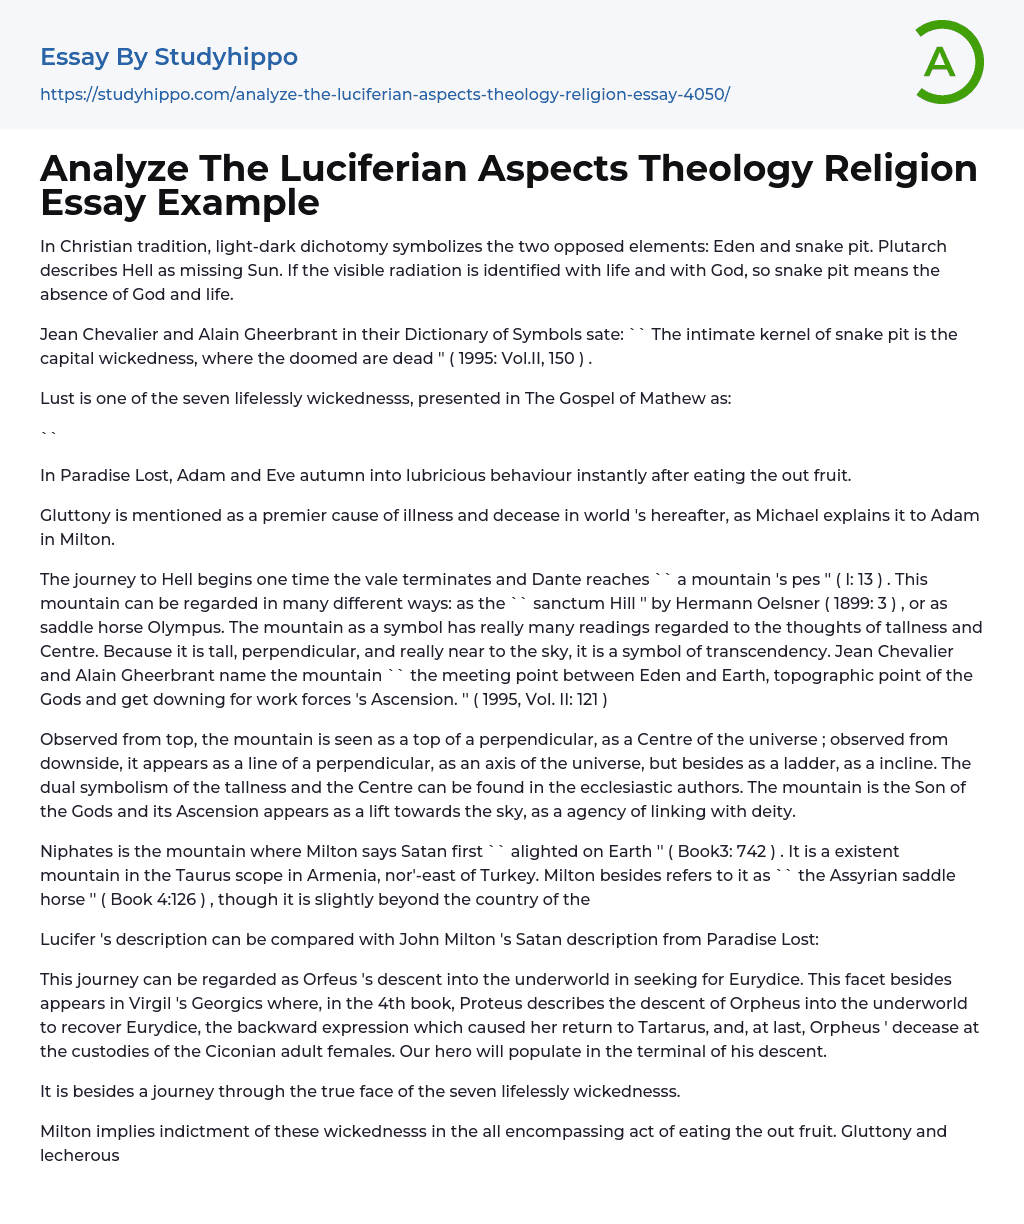 Analyze The Luciferian Aspects Theology Religion Essay Example